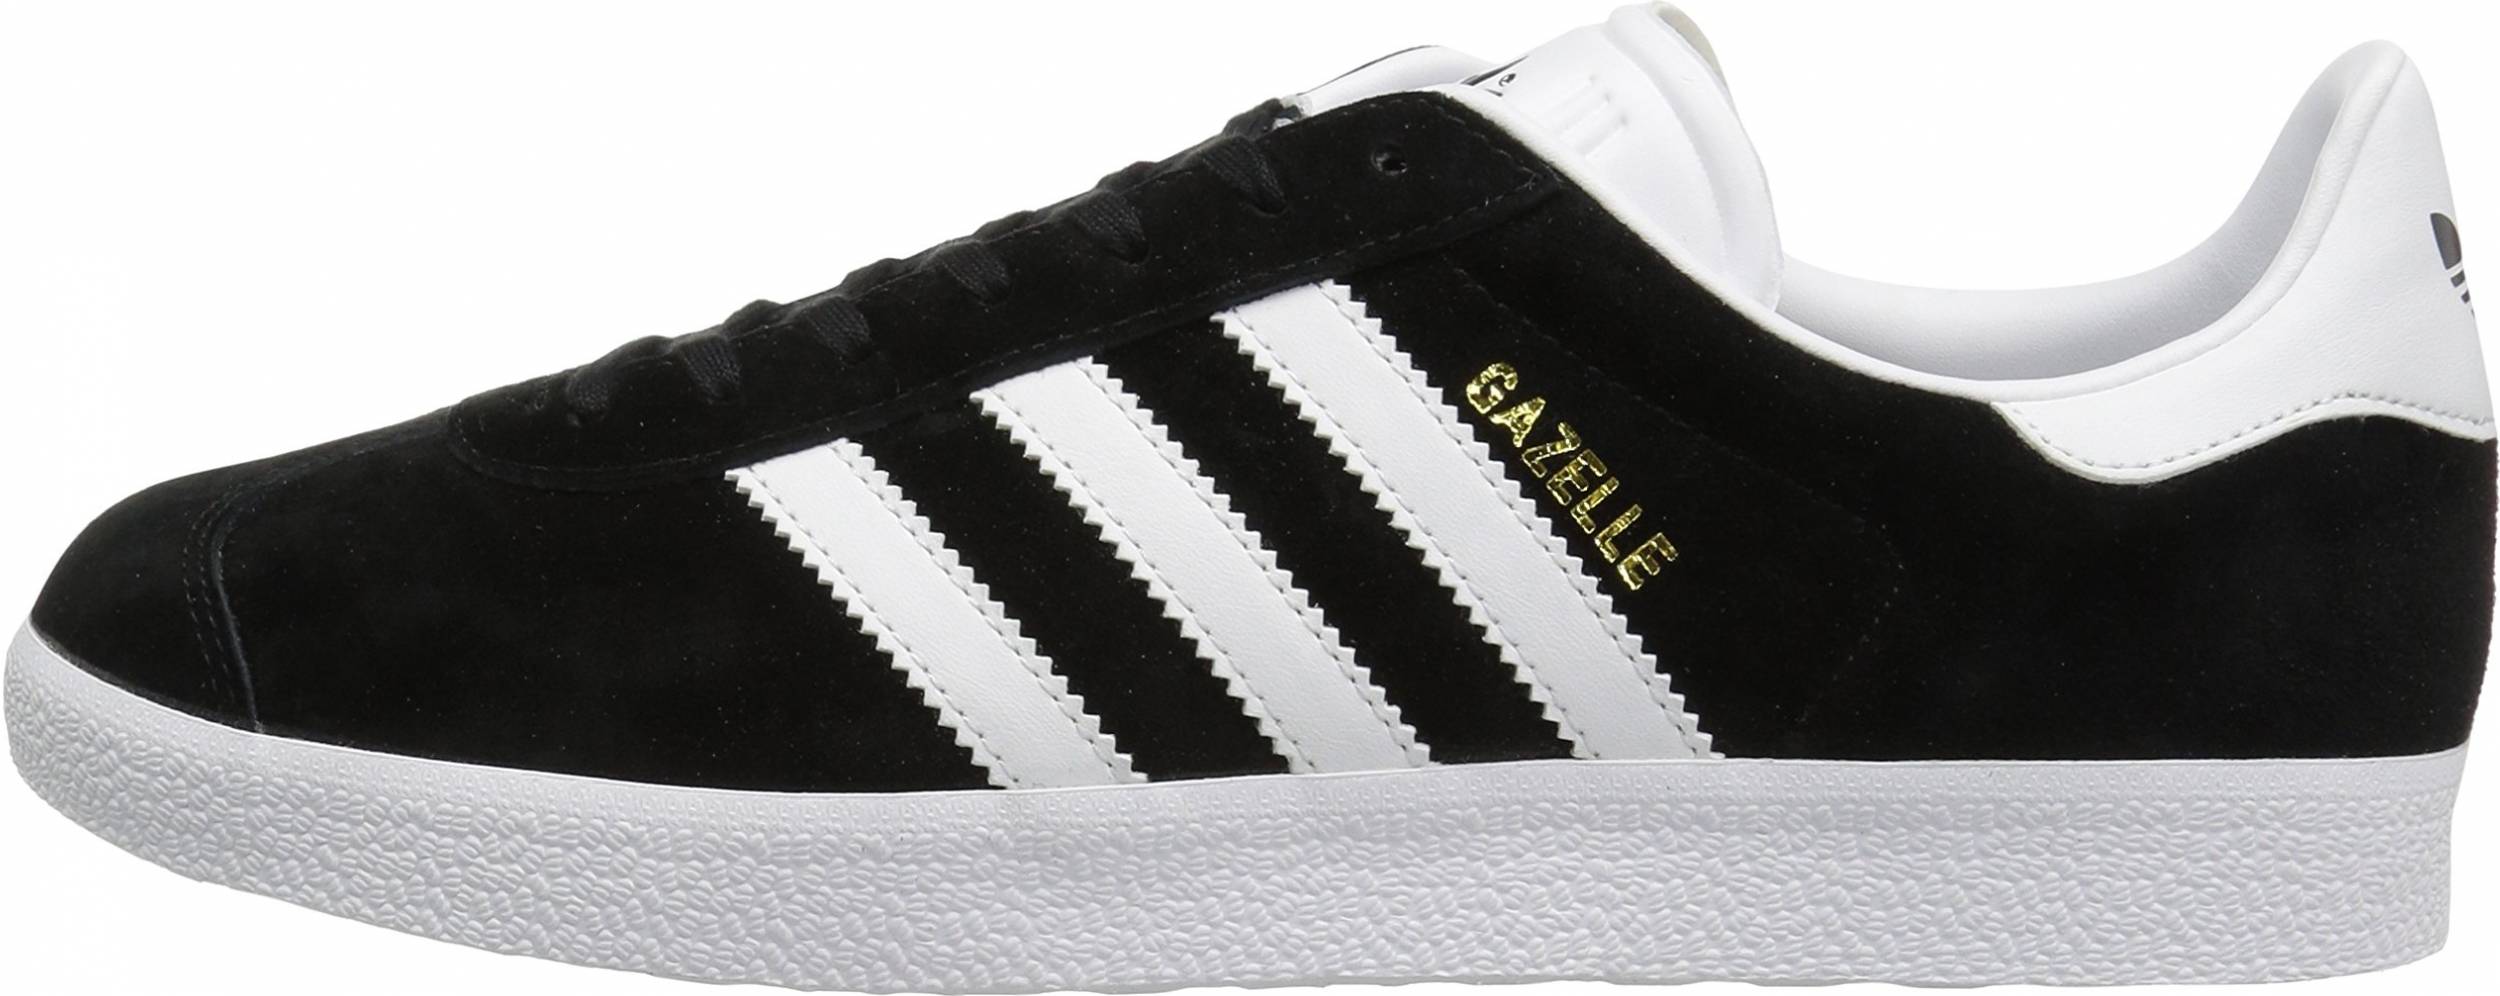 Adidas Gazelle sneakers in 50+ colors (only $46) | RunRepeat تعليم البيانو